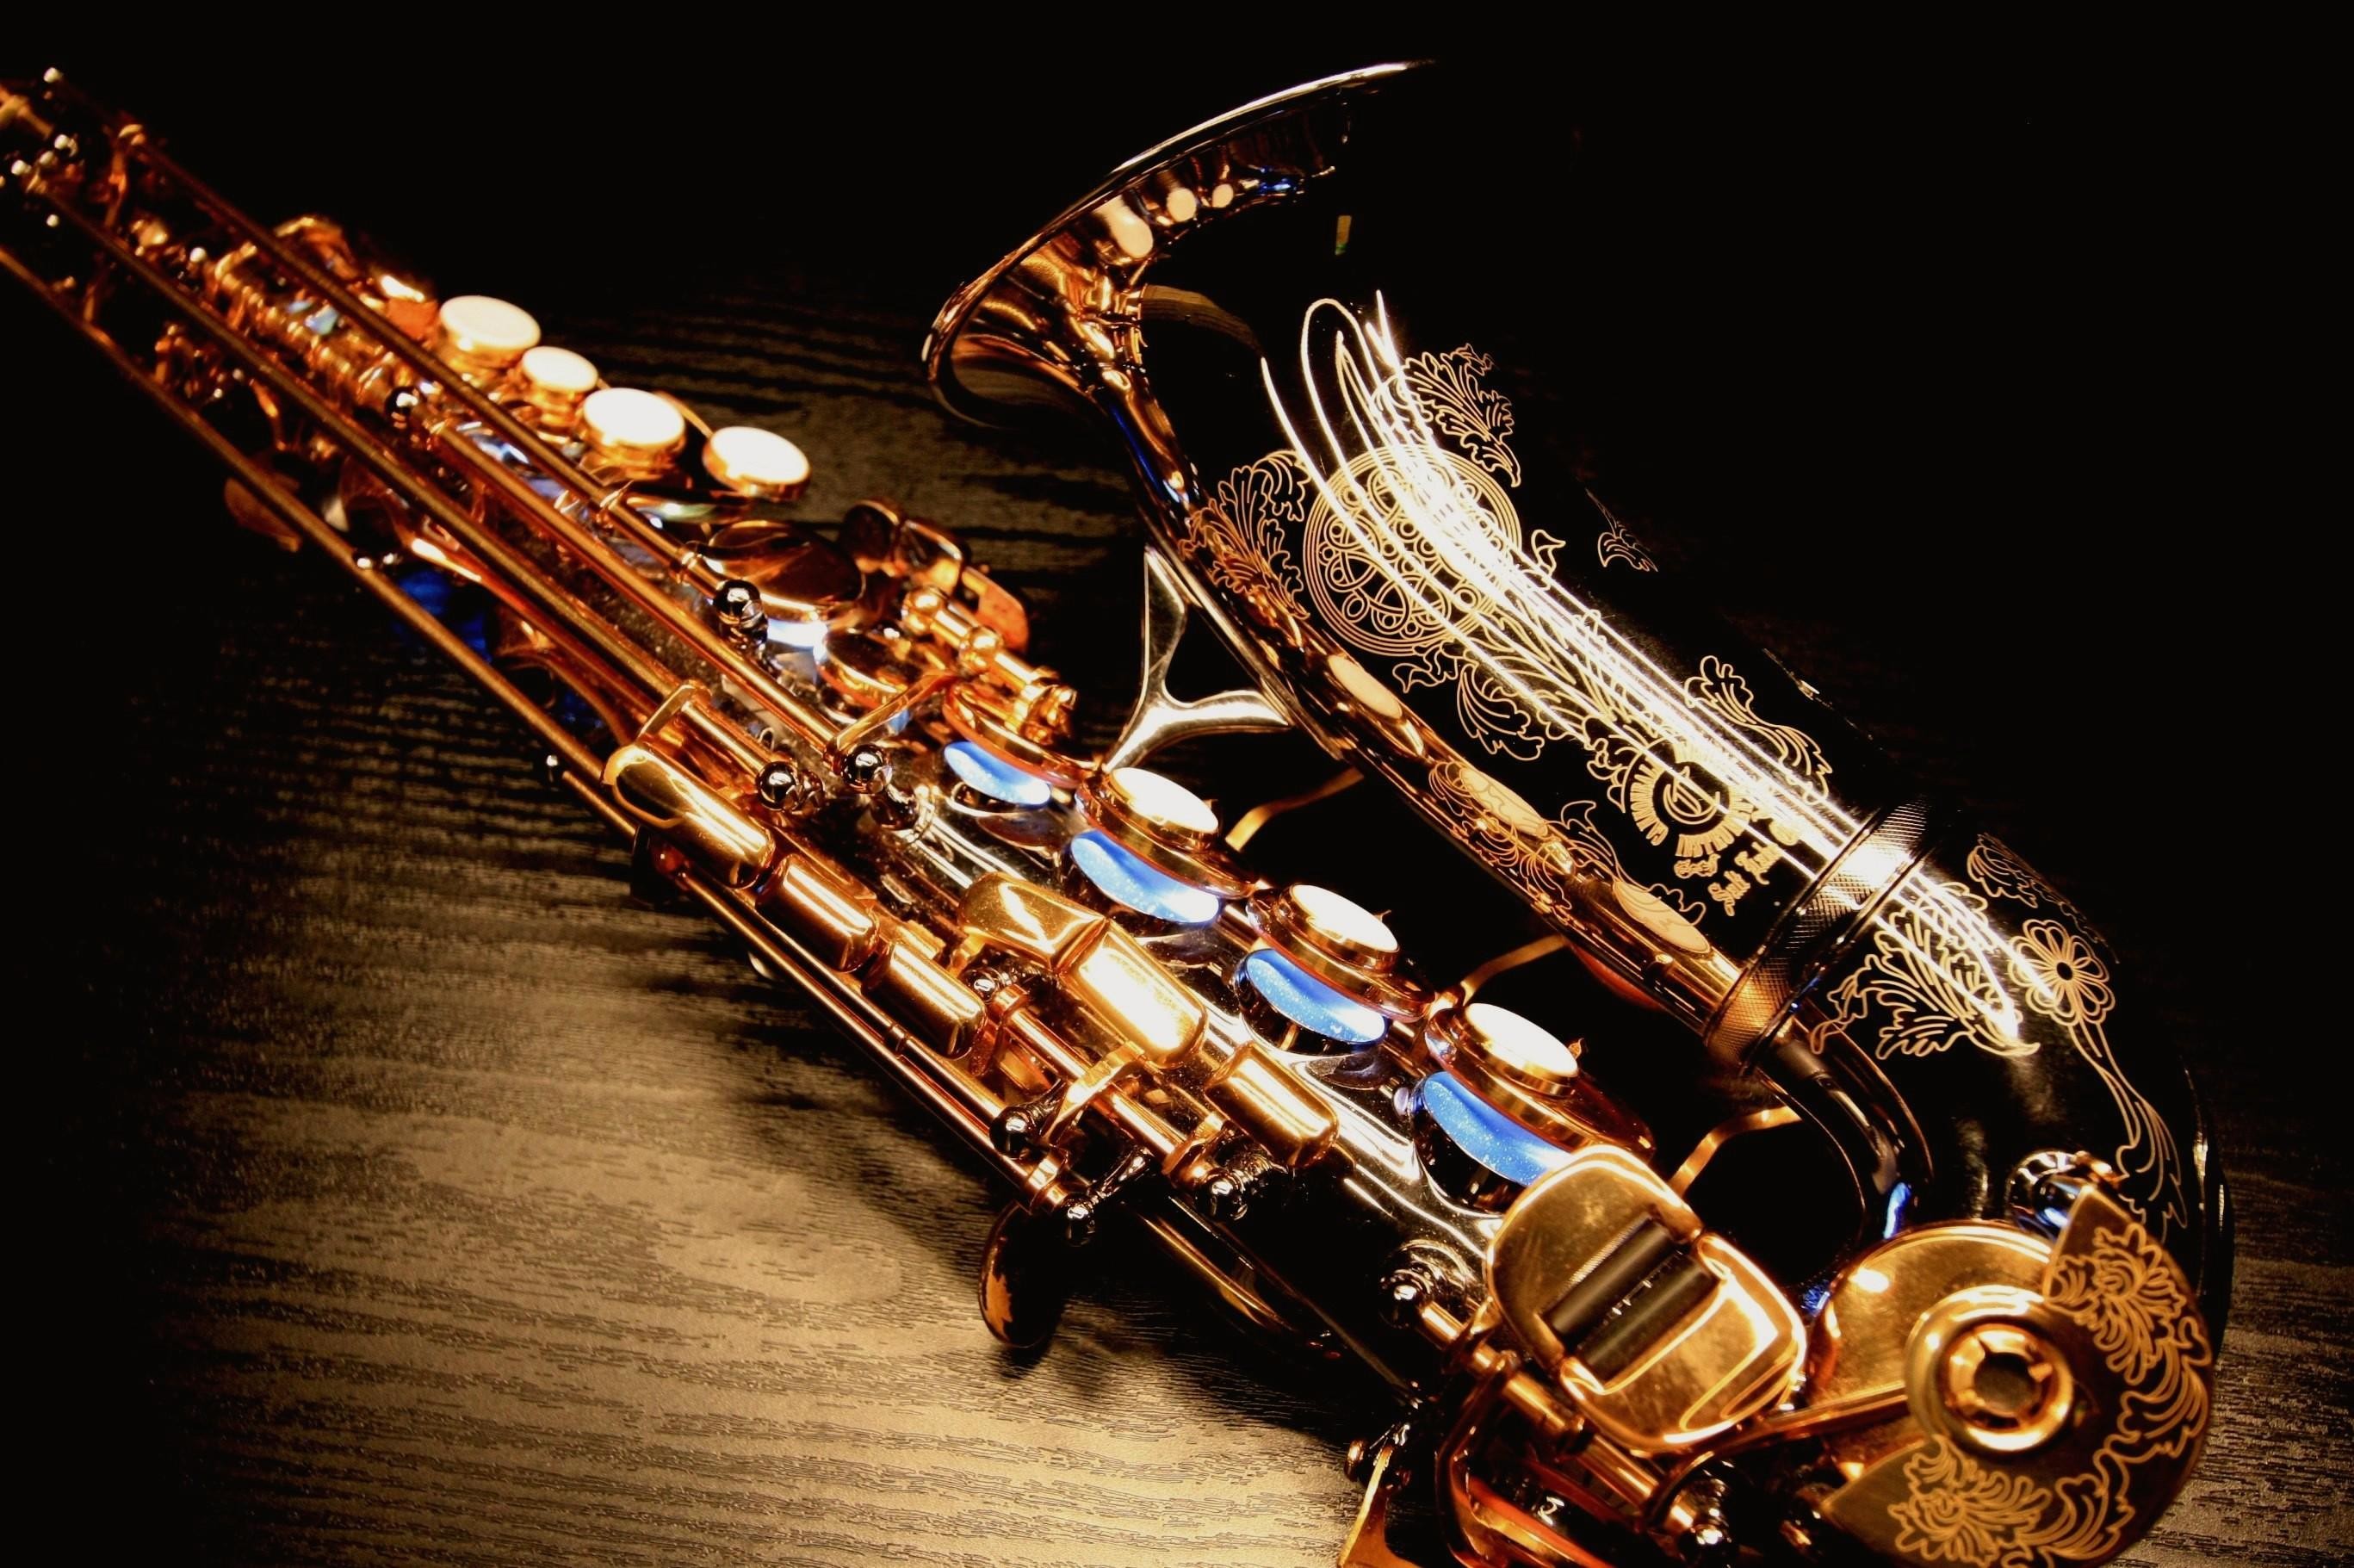 2734x1821 Saxophone Wallpaper Phone For Desktop Wallpaper 2734 x 1821 px 1.46 MB jazz  art trumpet band